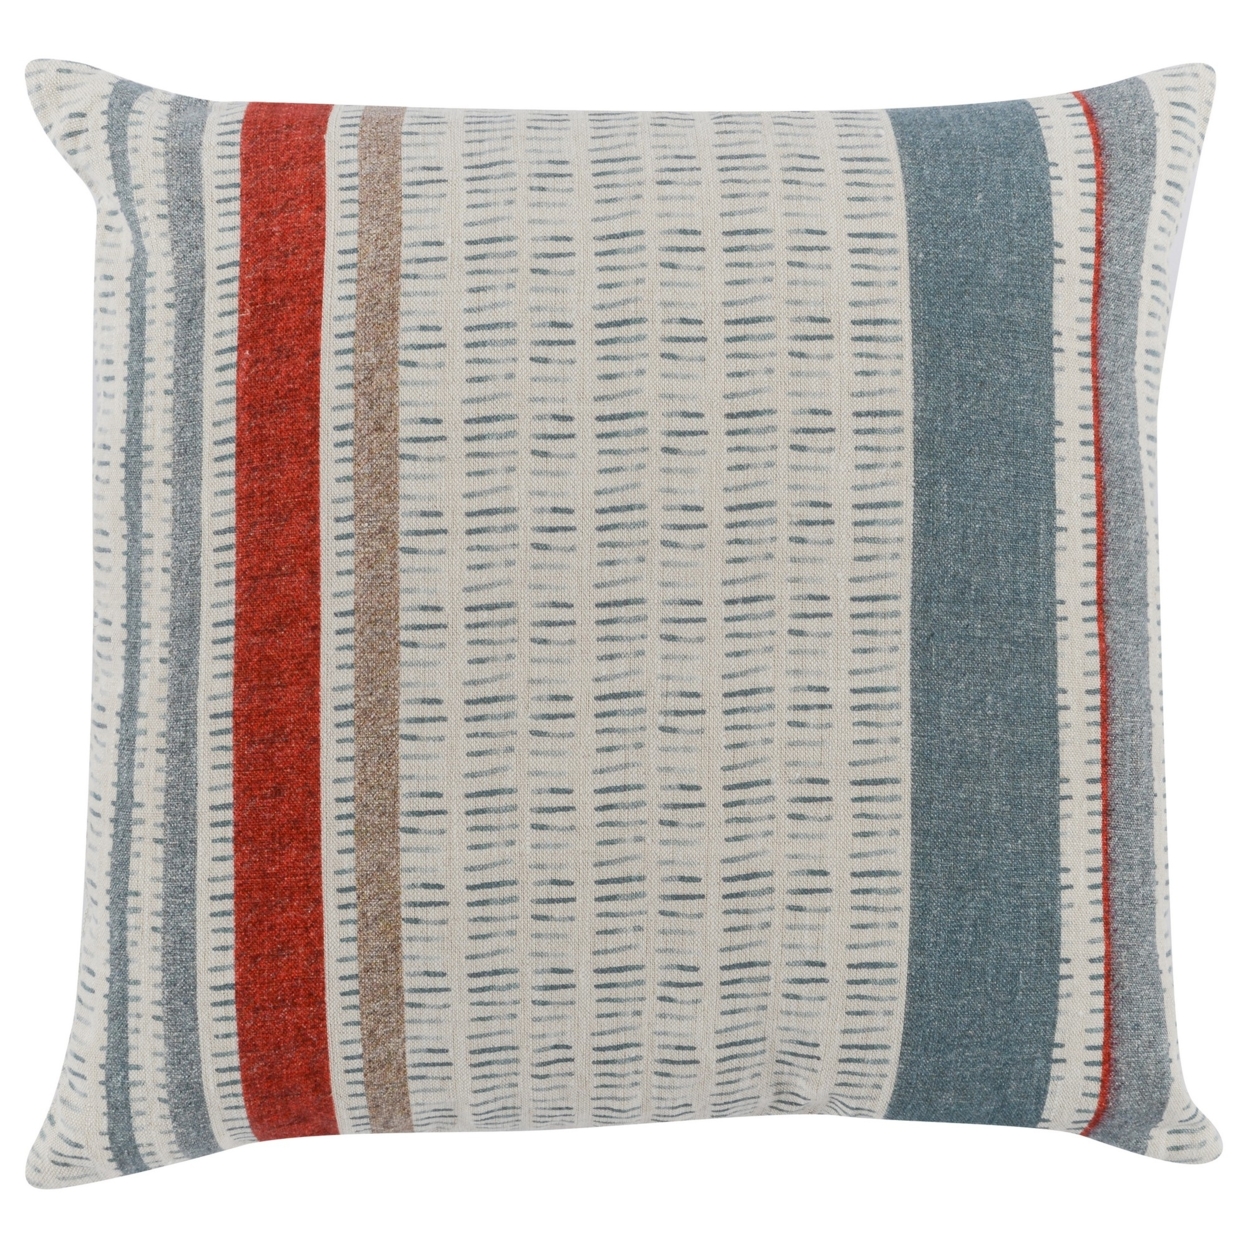 20 X 20 Linen Accent Throw Pillow, Down Insert, Red White Blue Gray Stripes- Saltoro Sherpi